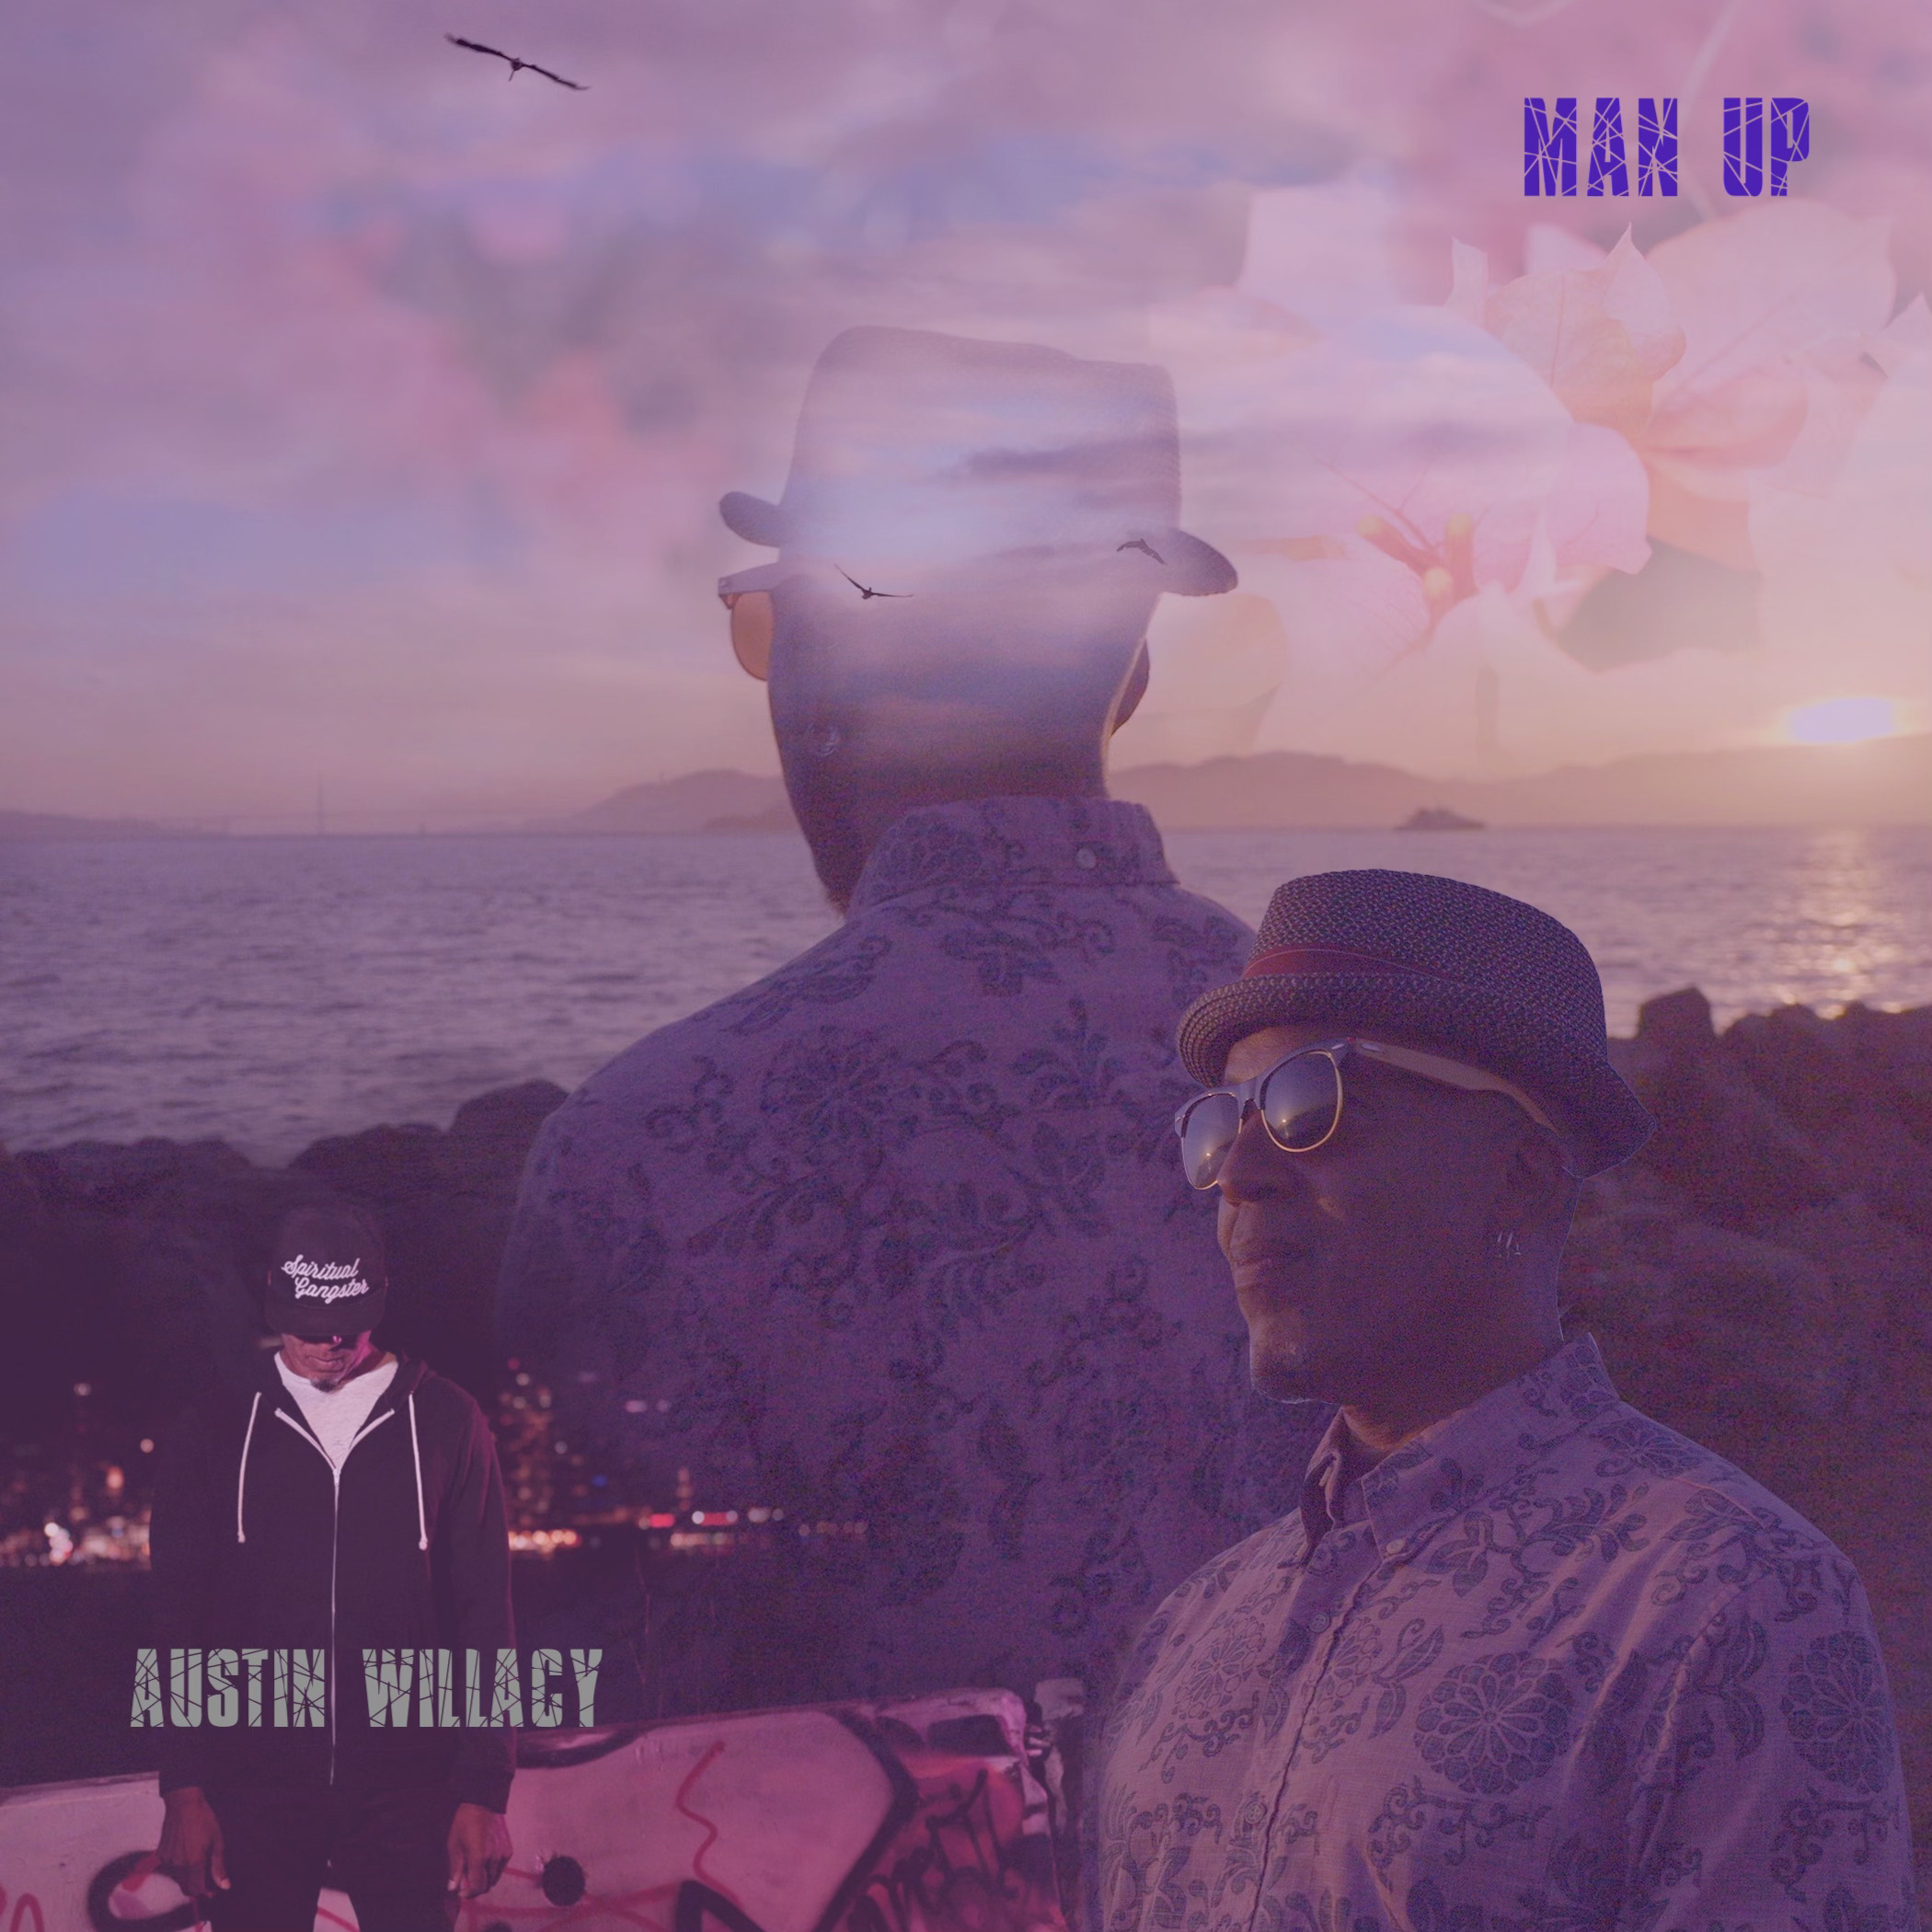 Austin Willacy “Man Up” single artwork